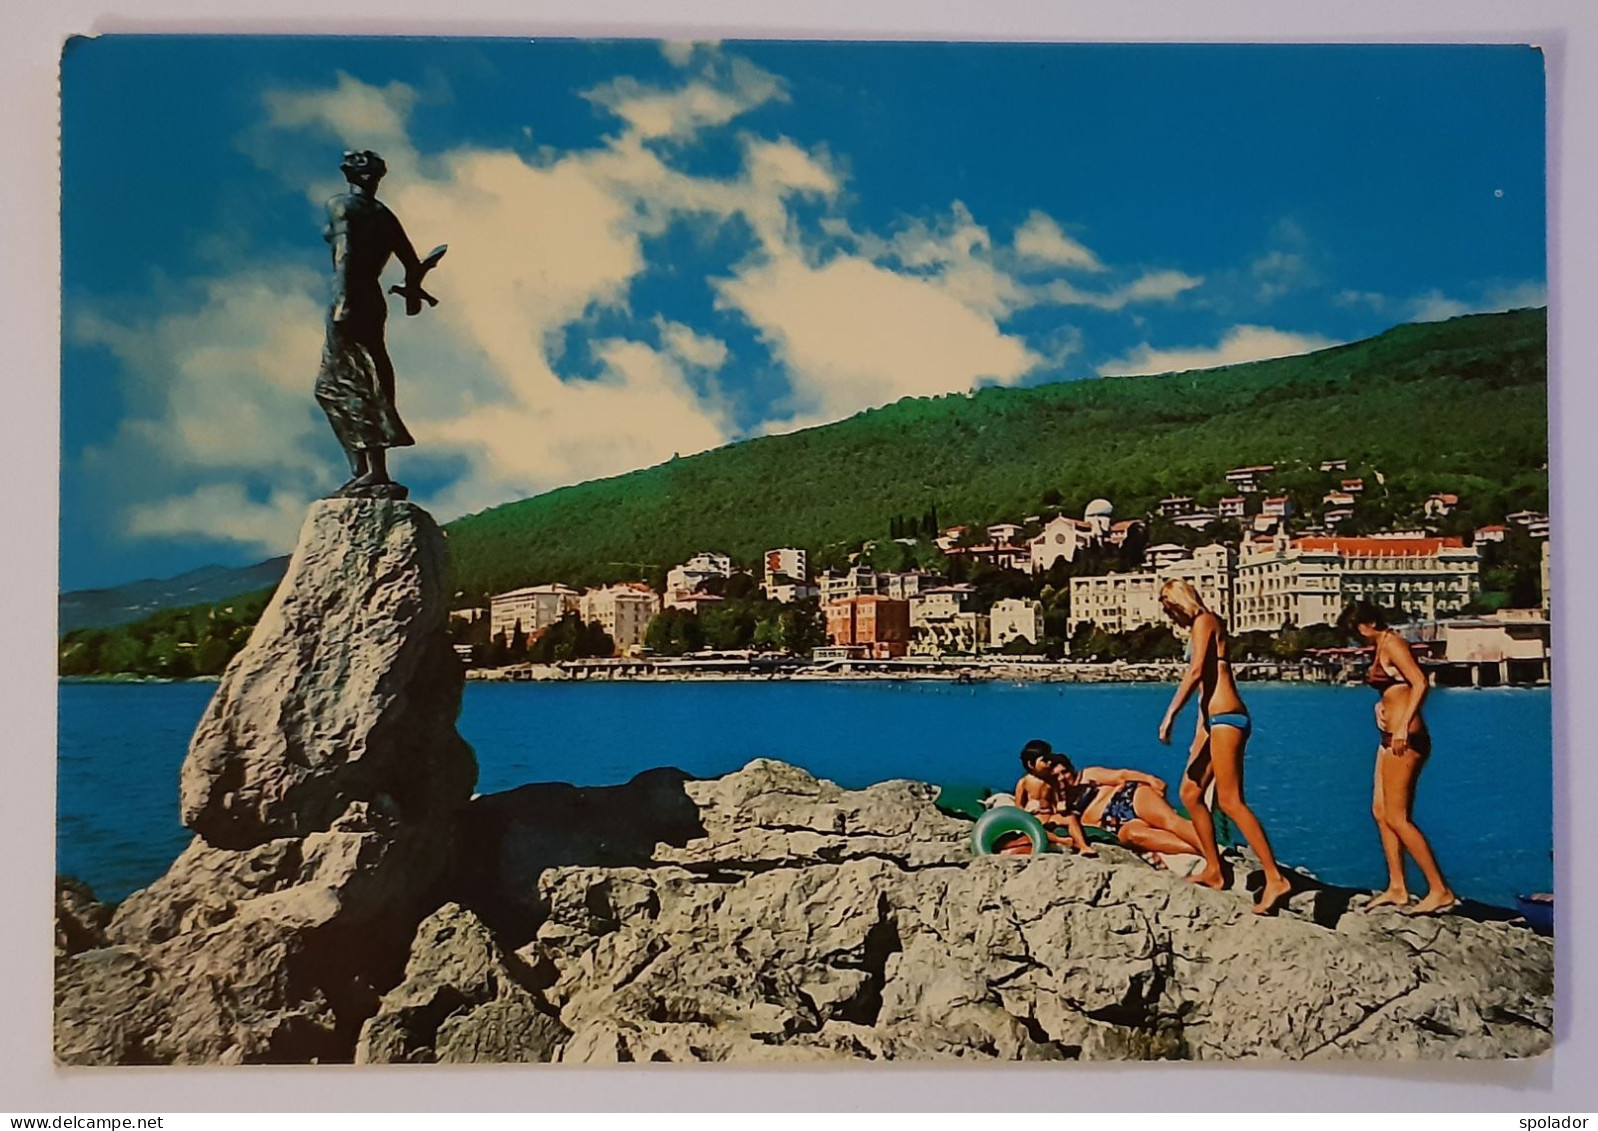 OPATIJA-Vintage Postcard-Ex-Yugoslavia-Croatia-Istra-Hrvatska-used With Stamp-1978 - Yougoslavie